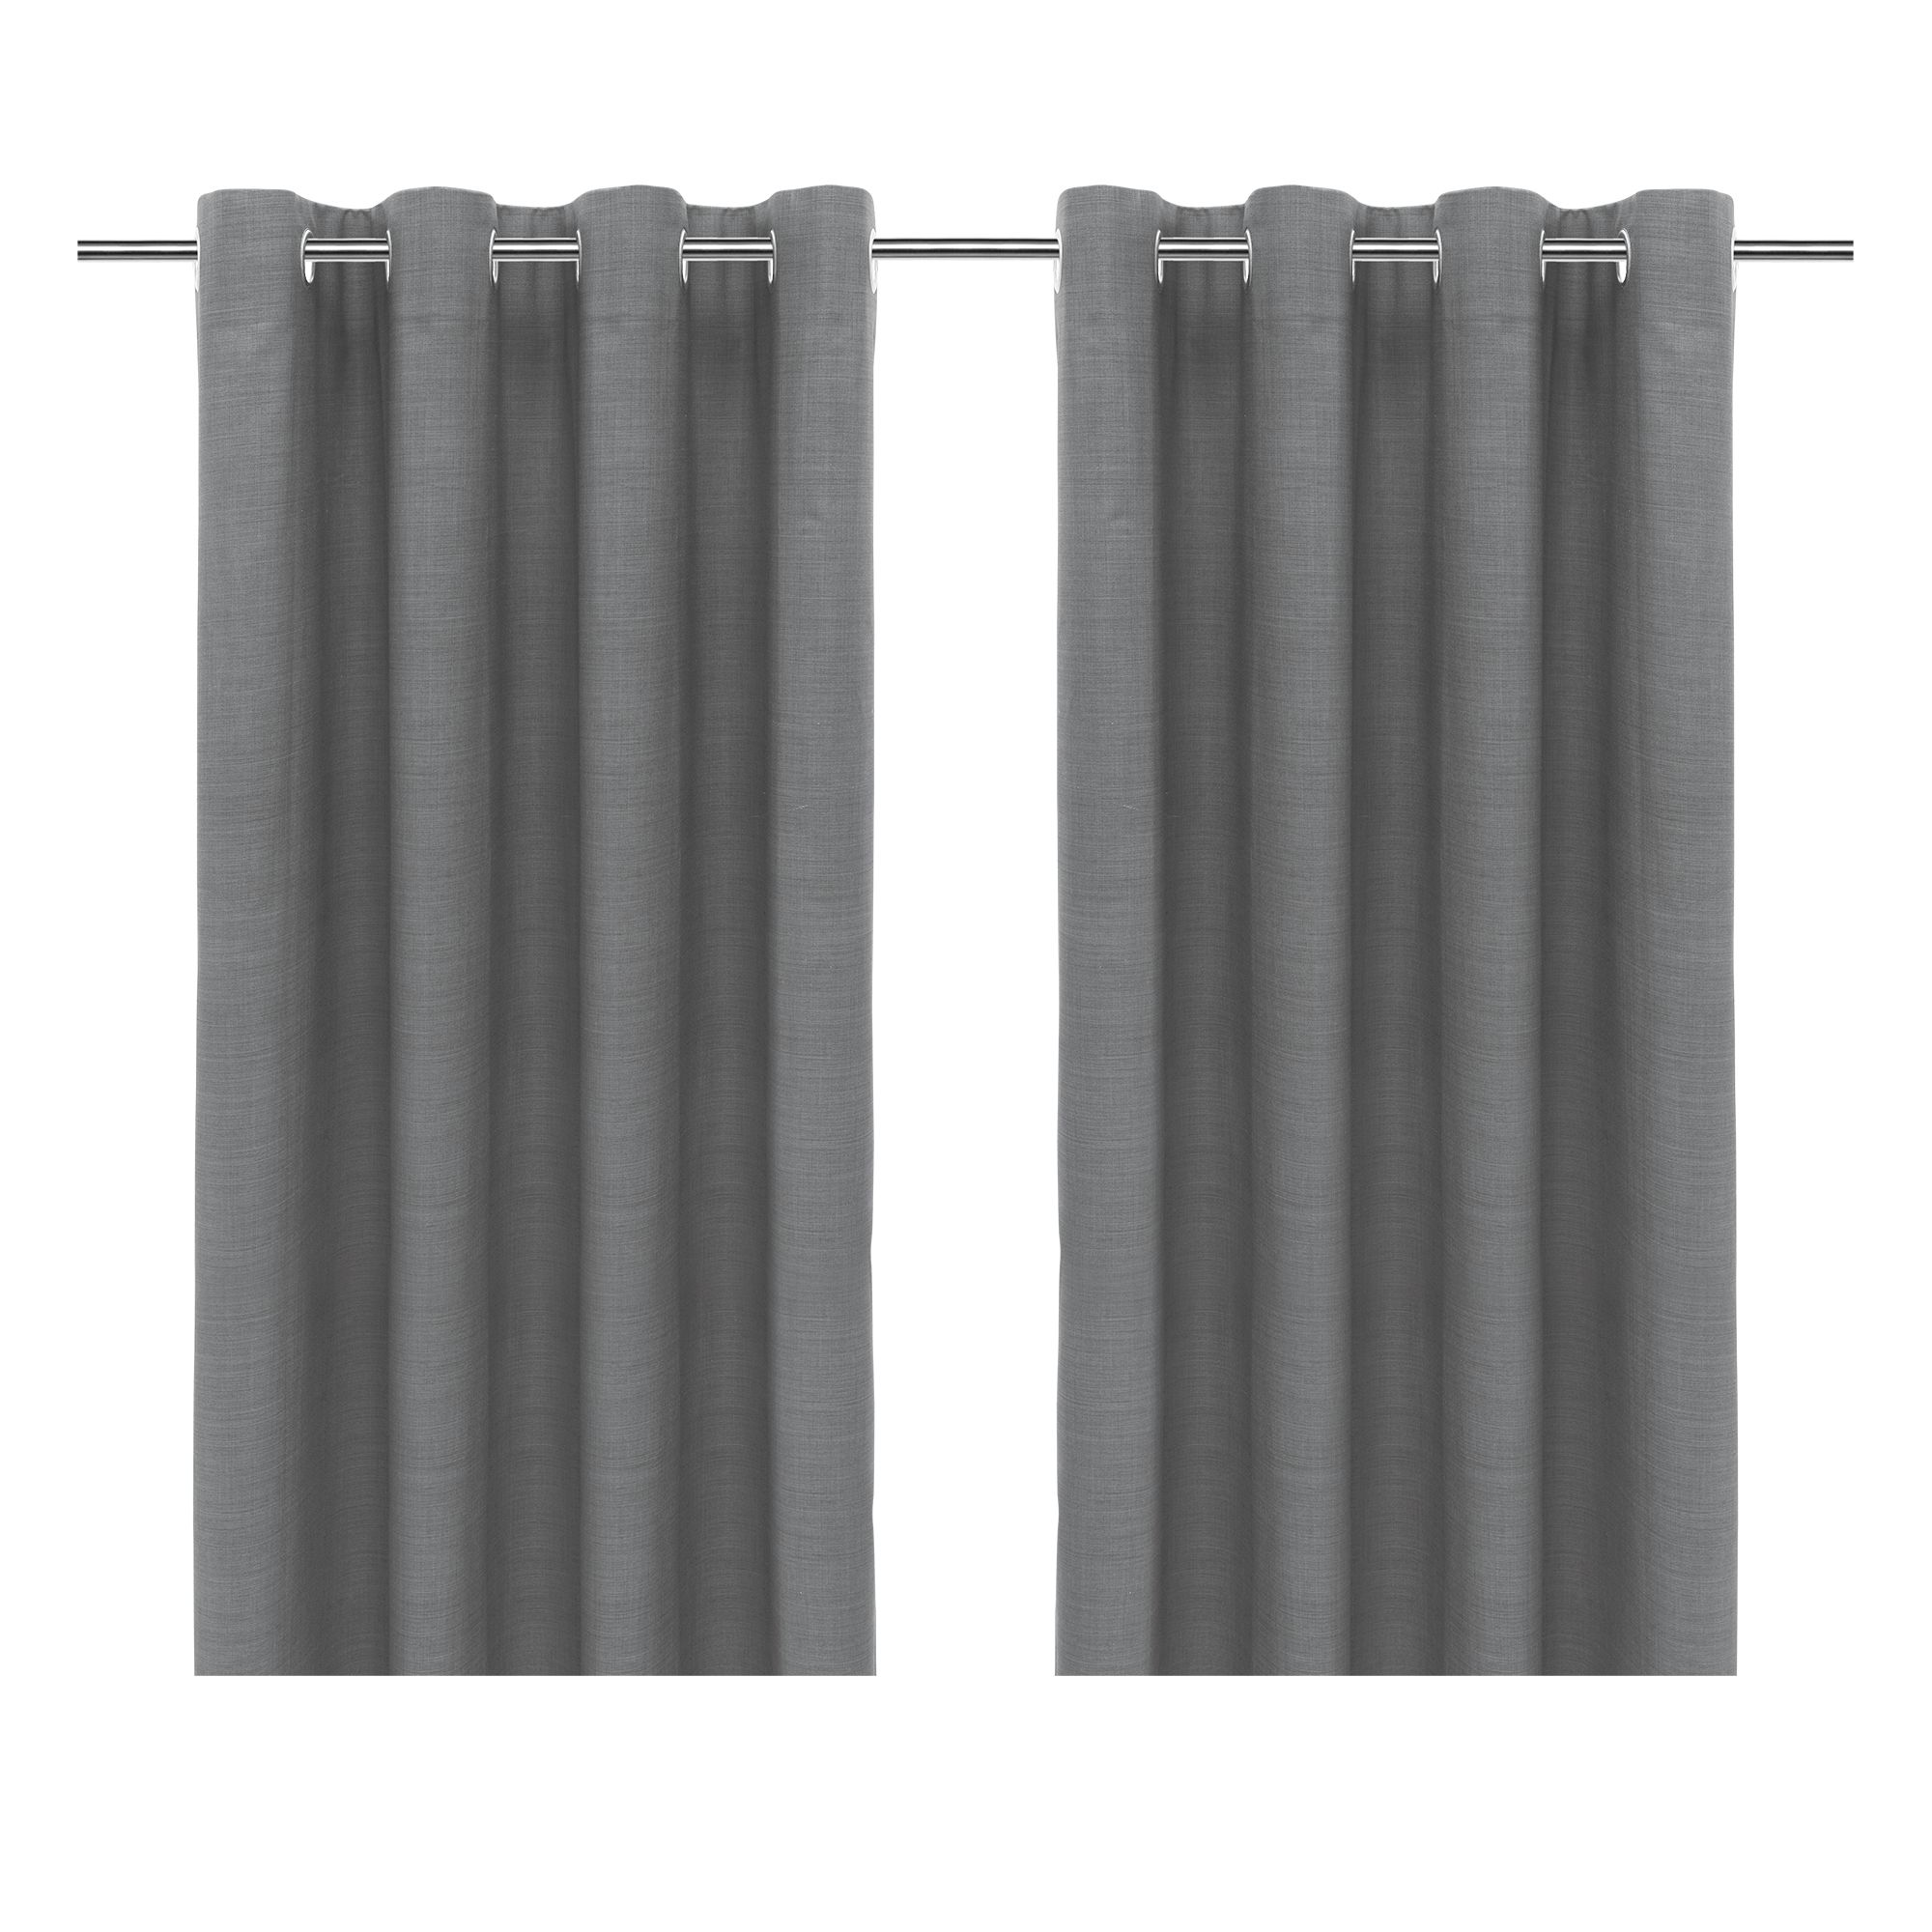 Glend Grey Plain woven Blackout & thermal Eyelet Curtain (W)167cm (L)183cm, Pair